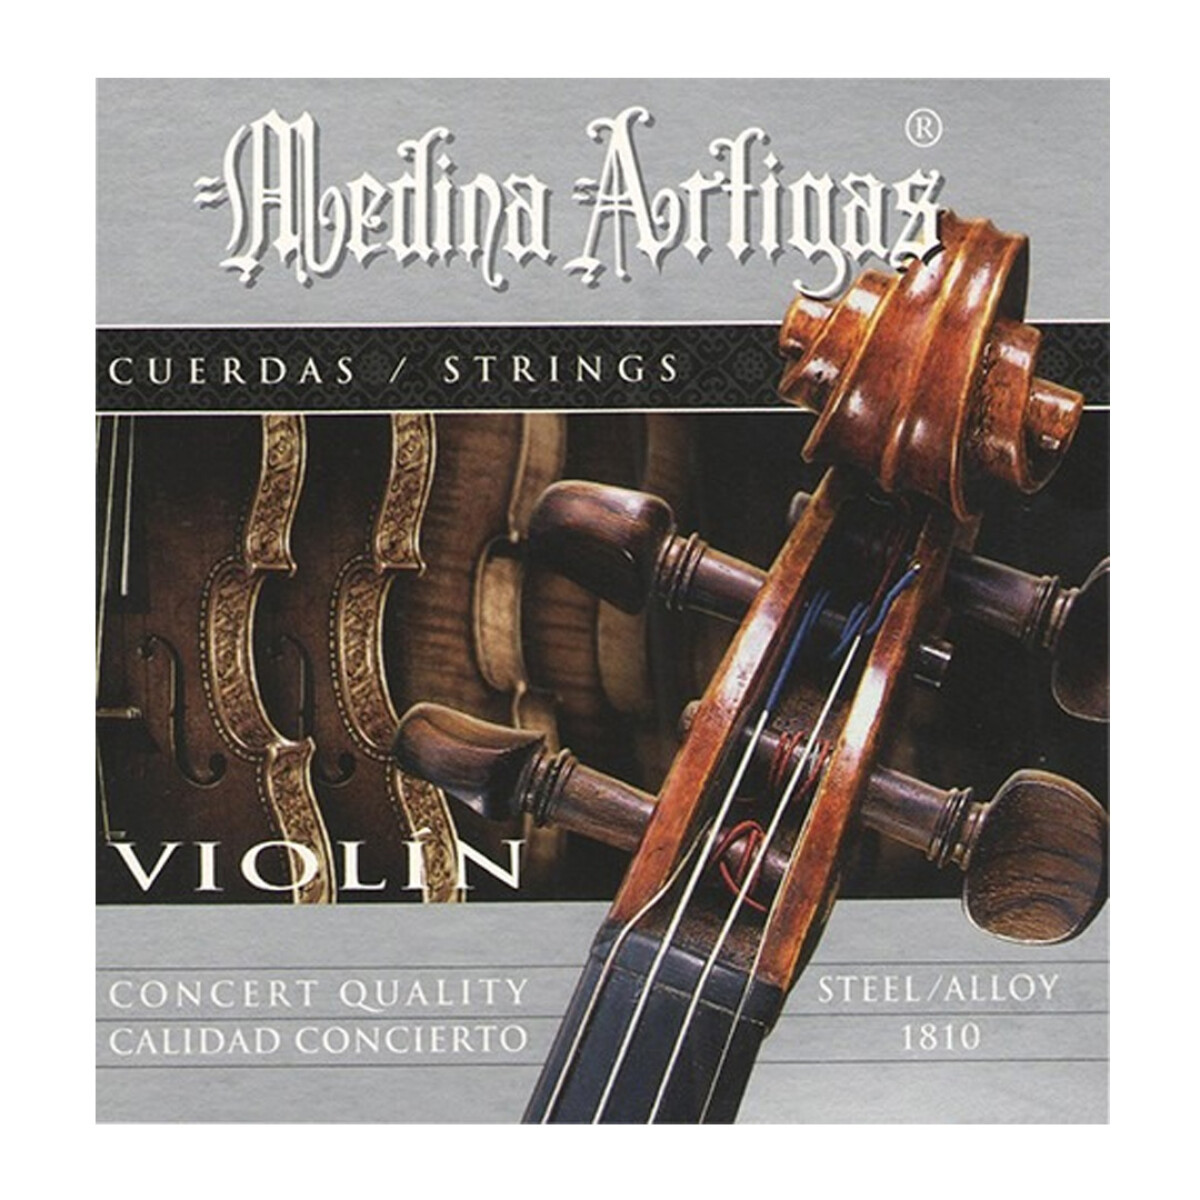 Encordado Violin Medina Artigas 1810 